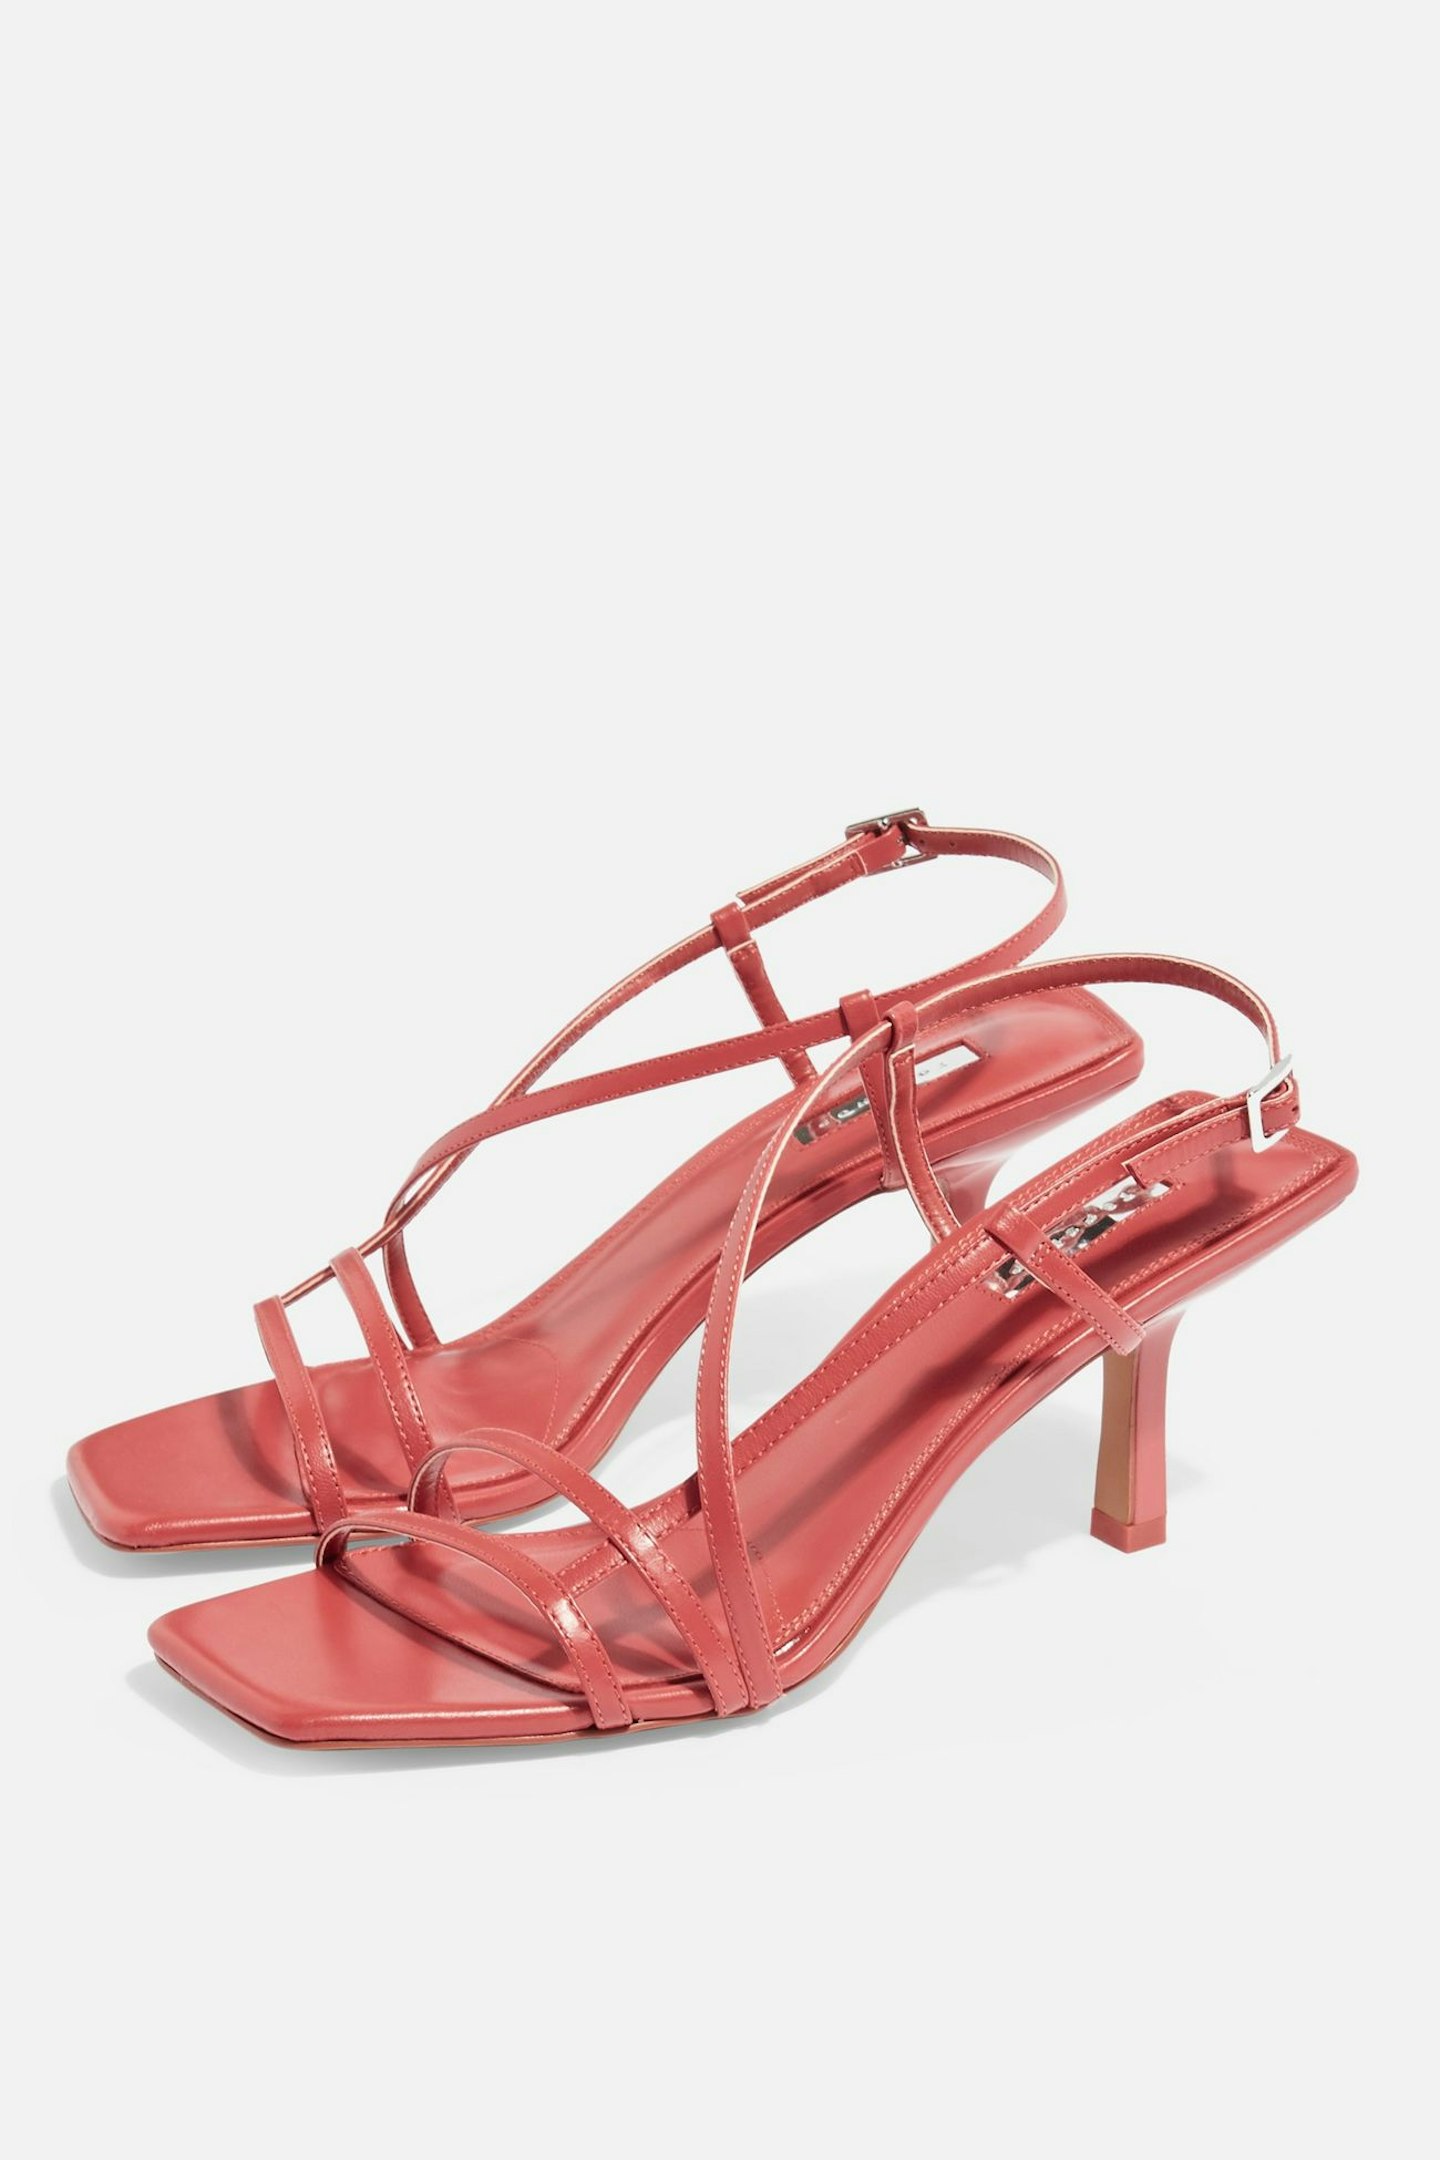 STRIPPY Coral Heeled Sandals, £39